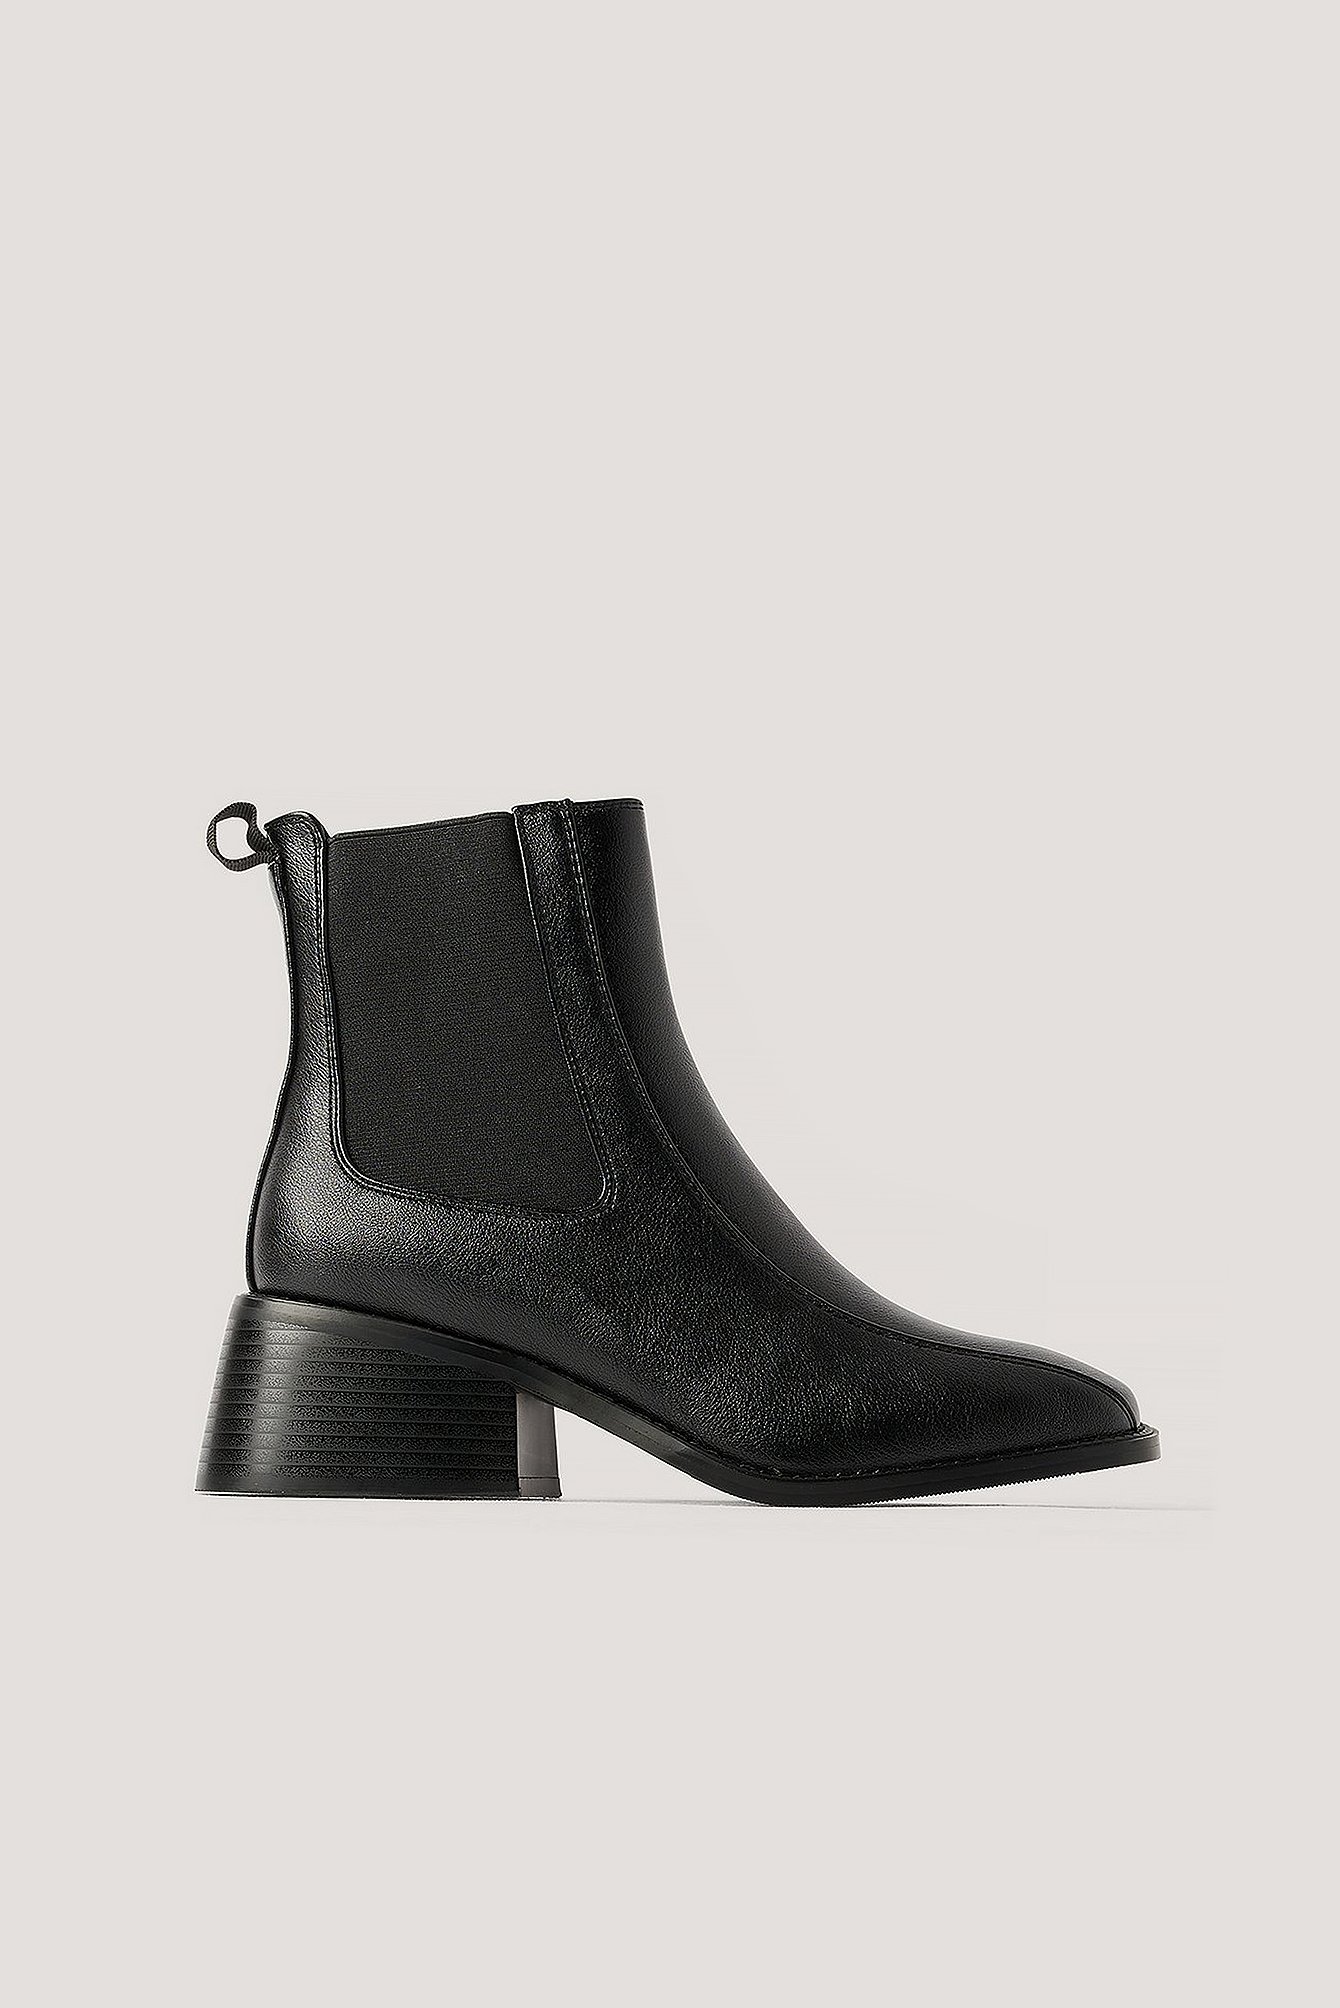 Black Squared Toe Chelsea Boots